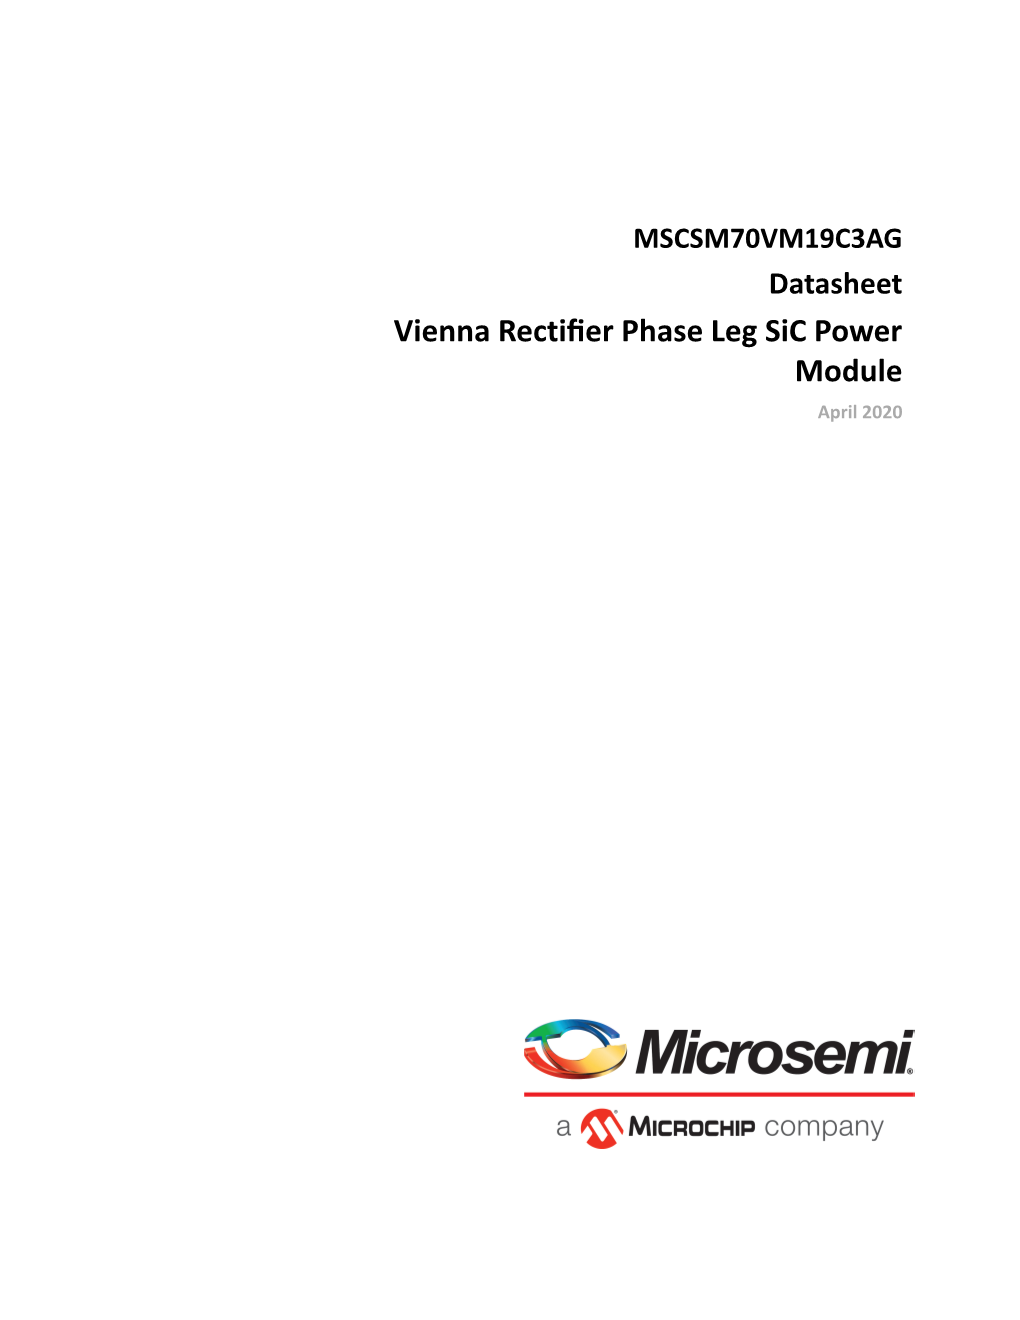 Vienna Rectifier Phase Leg Sic Power Module April 2020 Contents